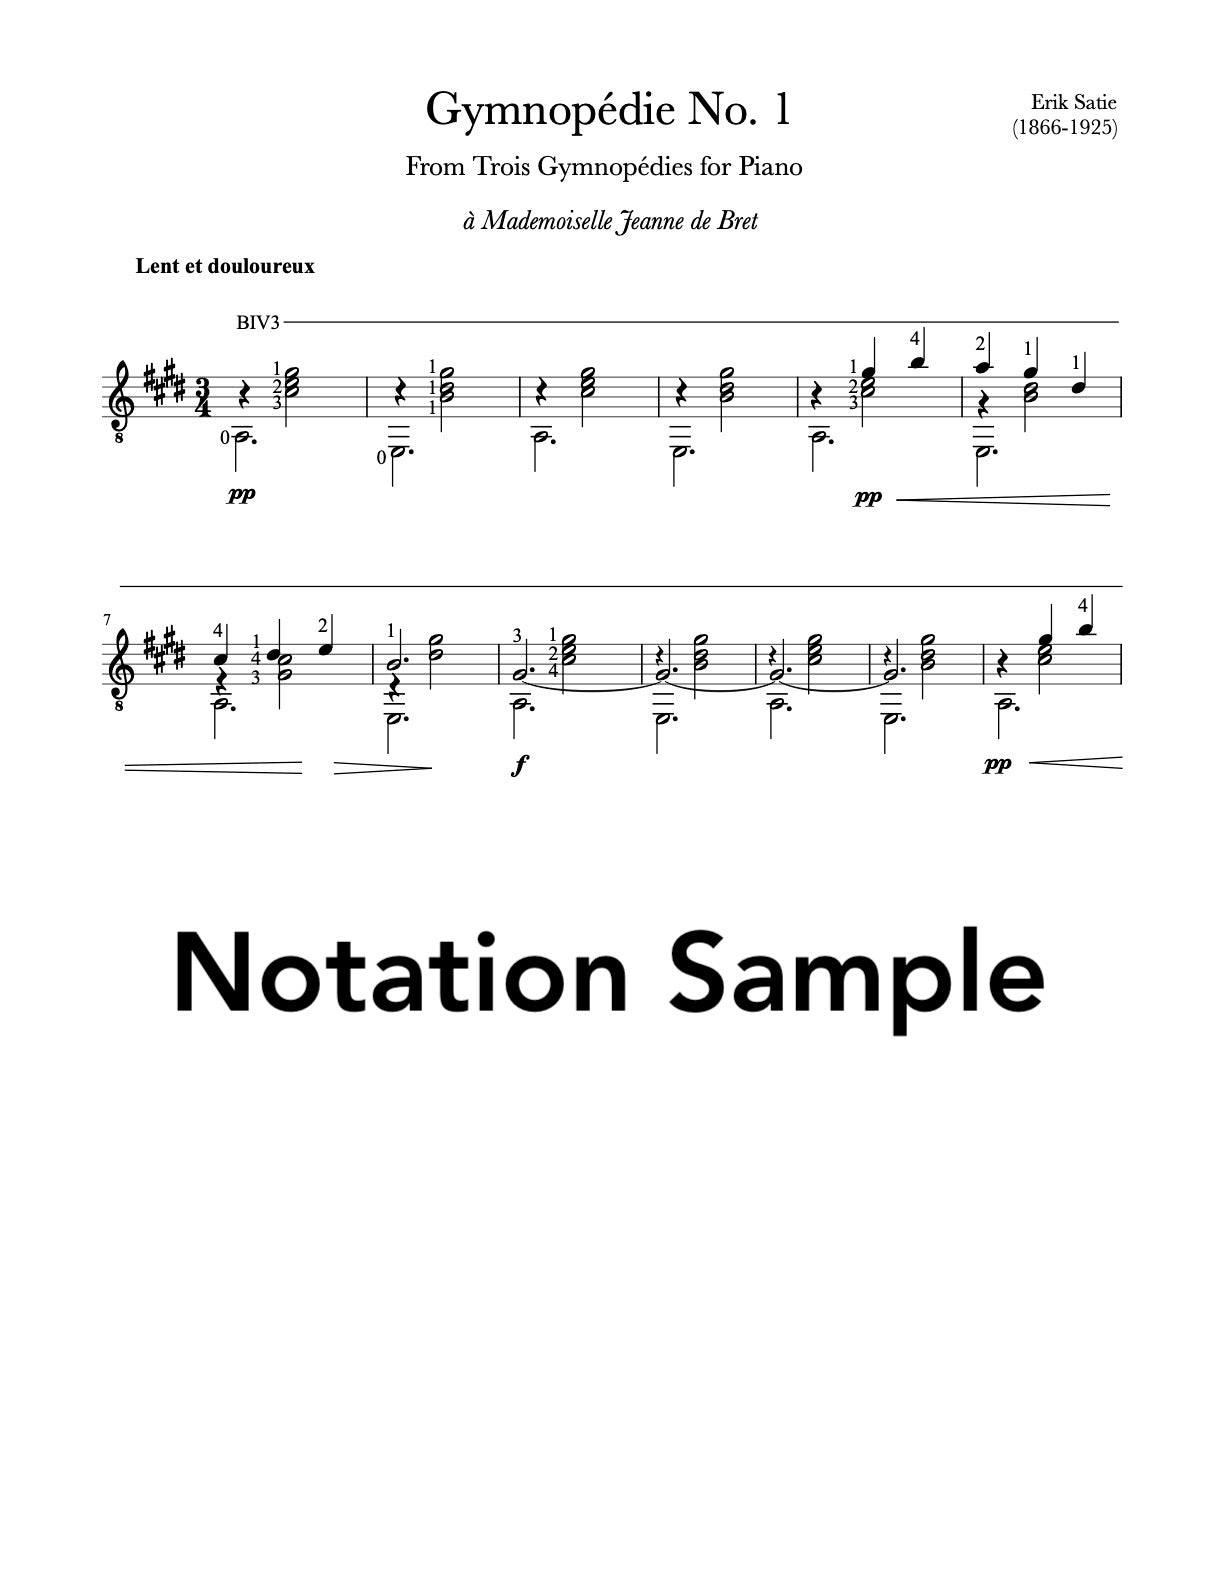 Gymnopédie No. 1 by Erik Satie for classical guitar. Sheet Music Sample.